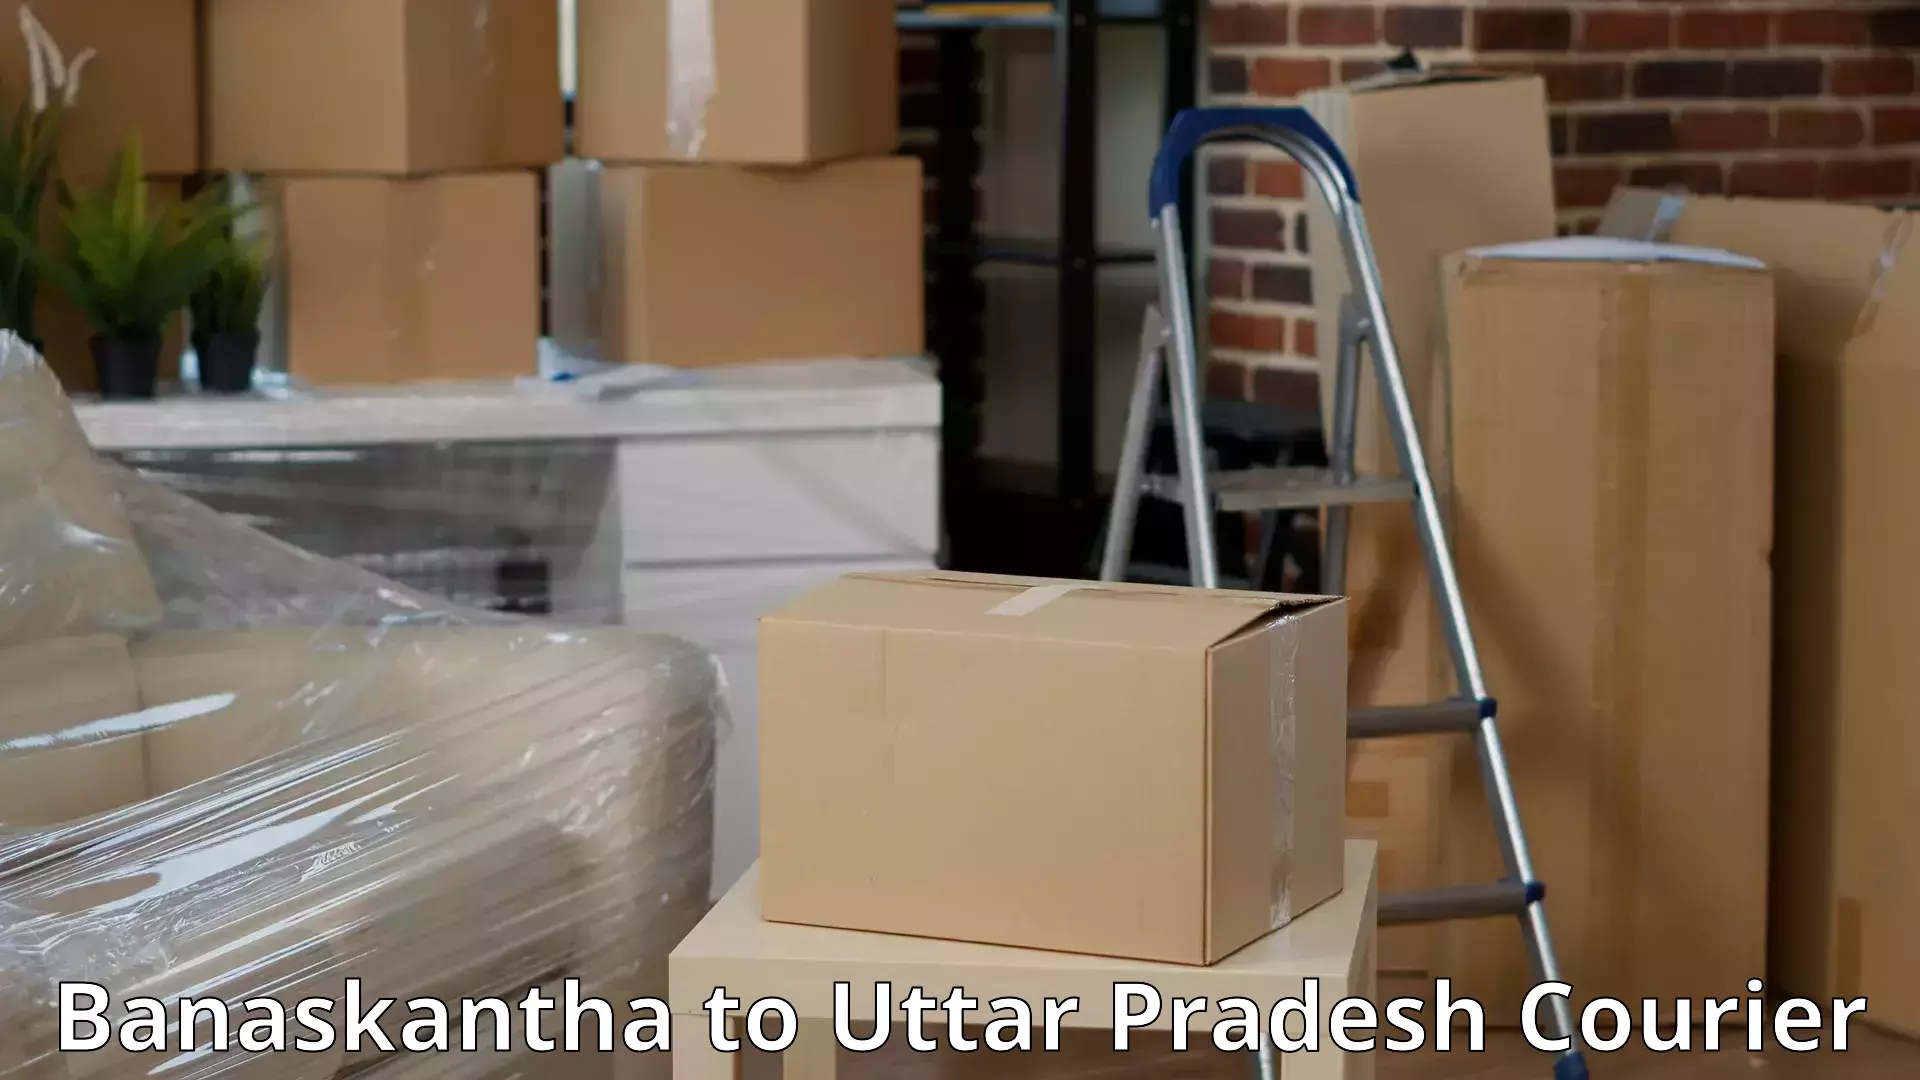 Professional moving company Banaskantha to Bailaha